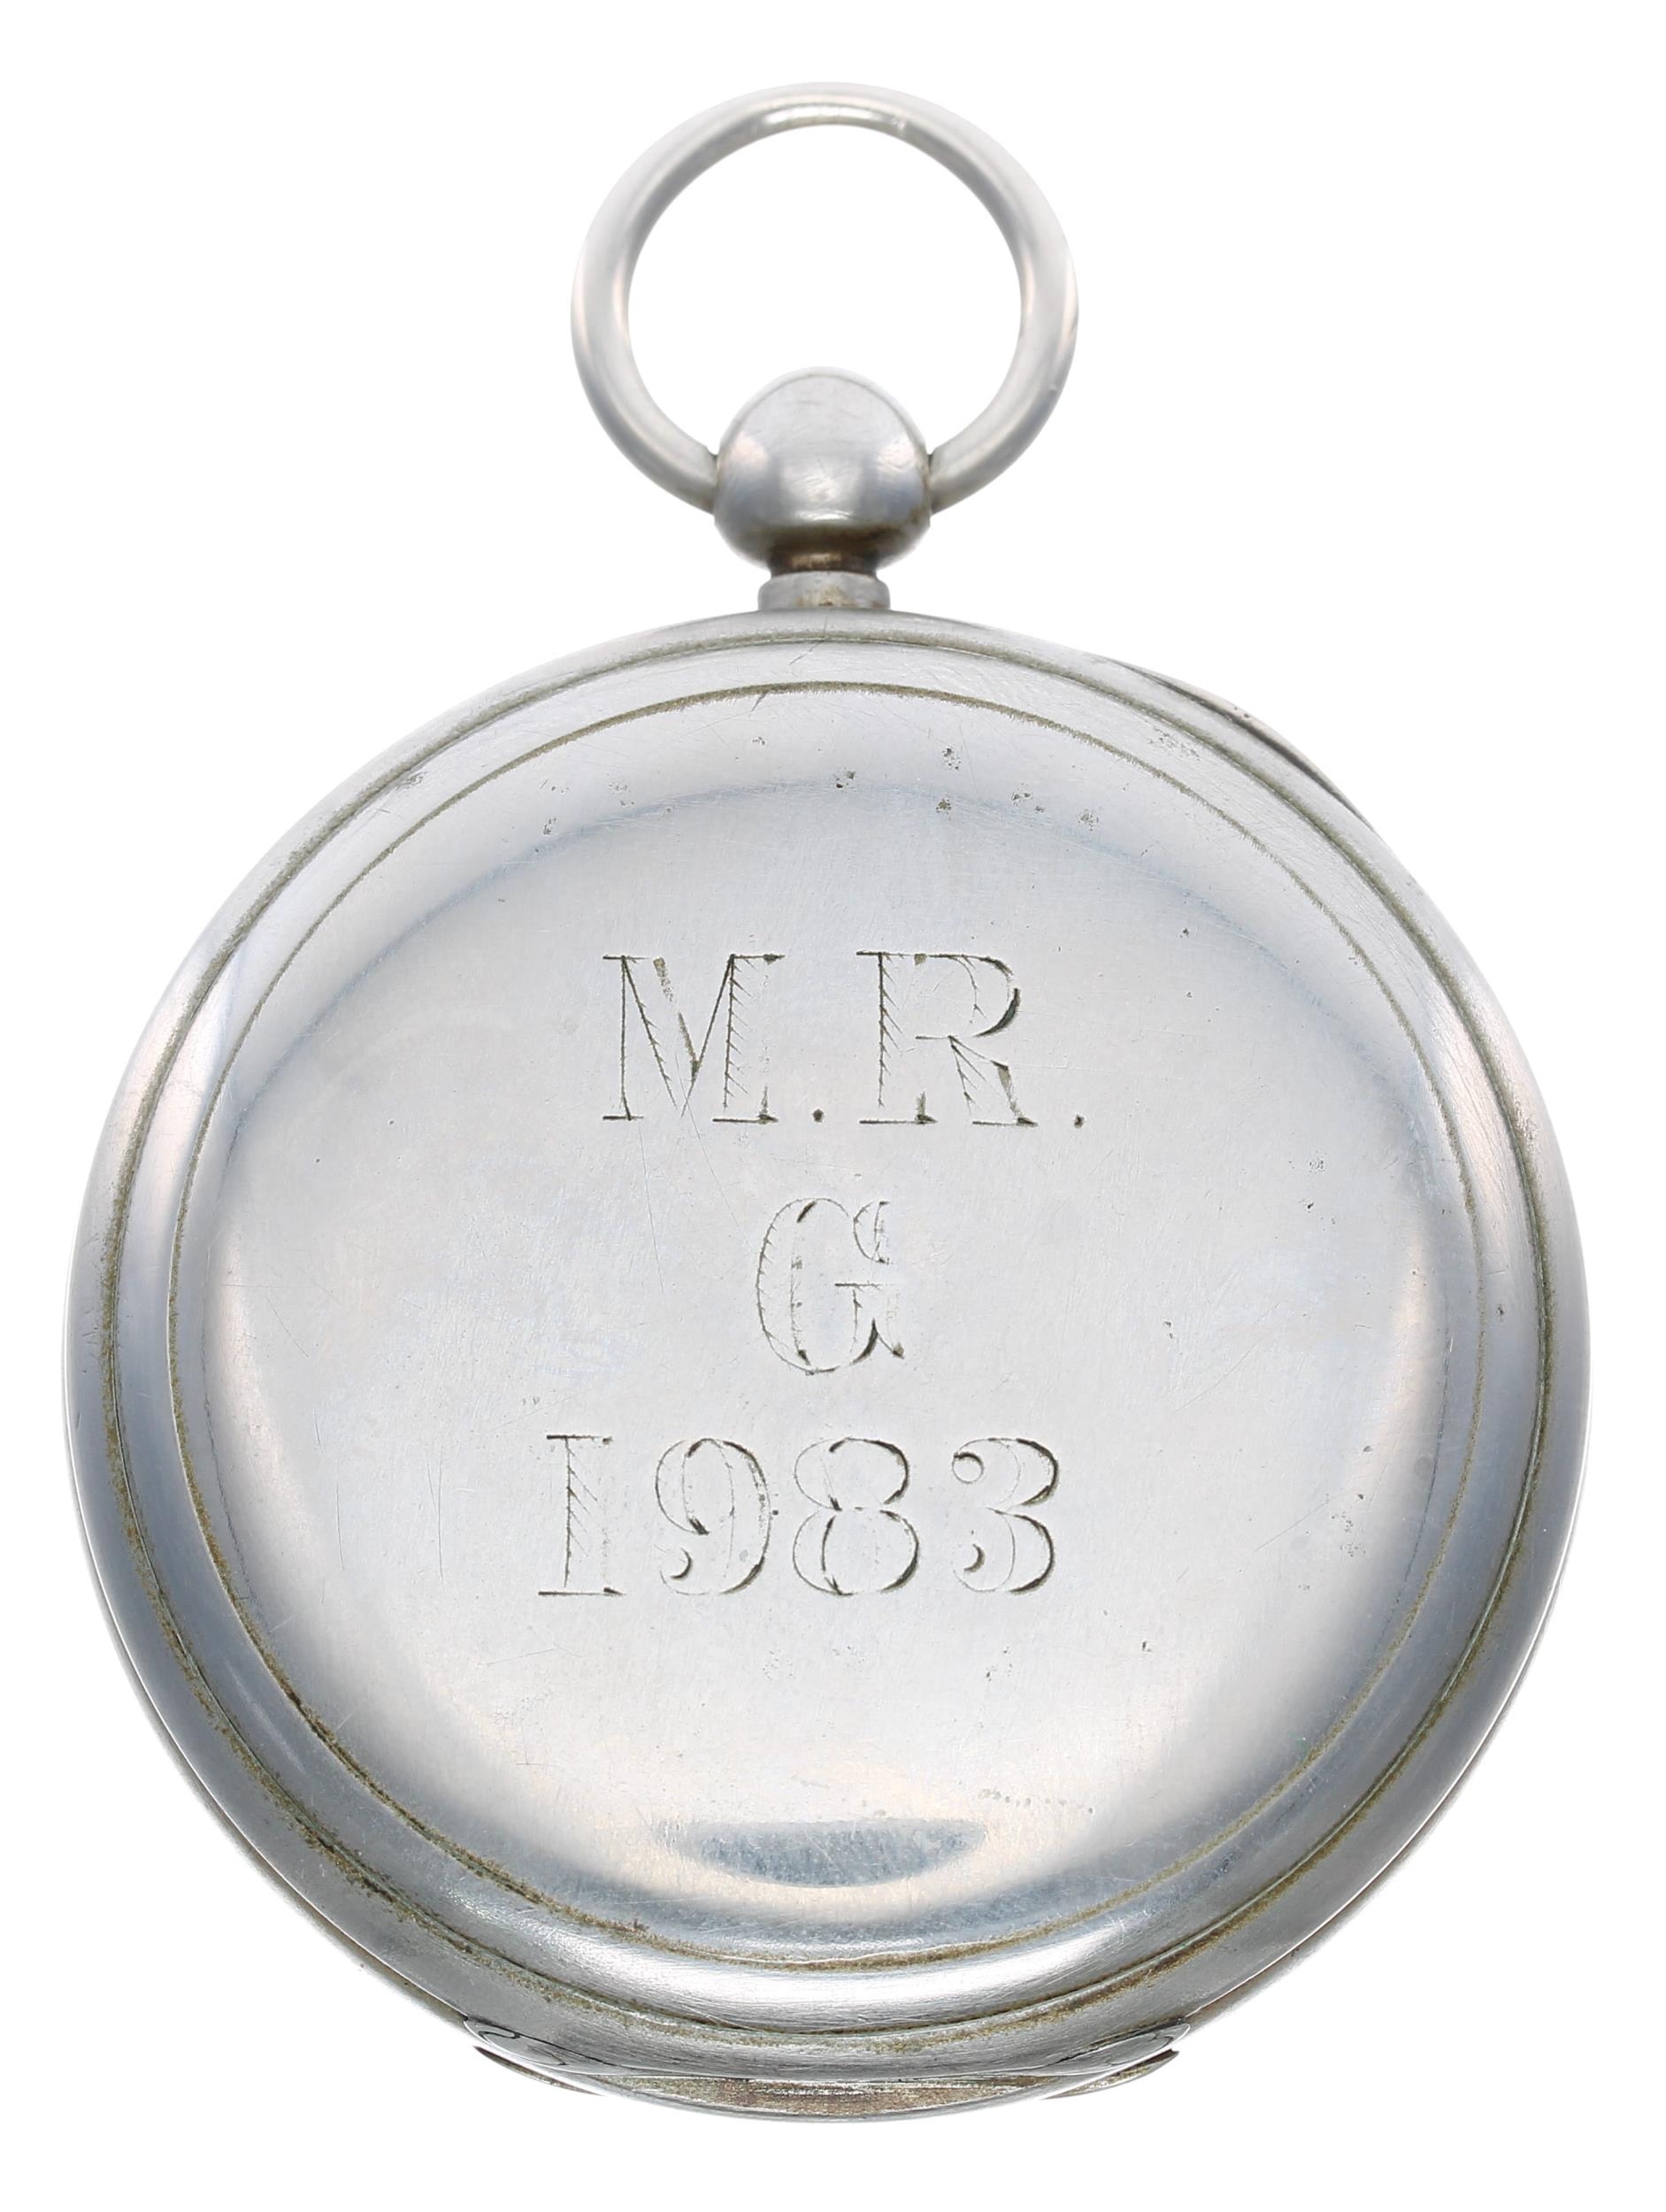 Railway Interest - American Waltham 'W'm Ellery' Midland Railway nickel cased lever pocket watch, - Image 4 of 4